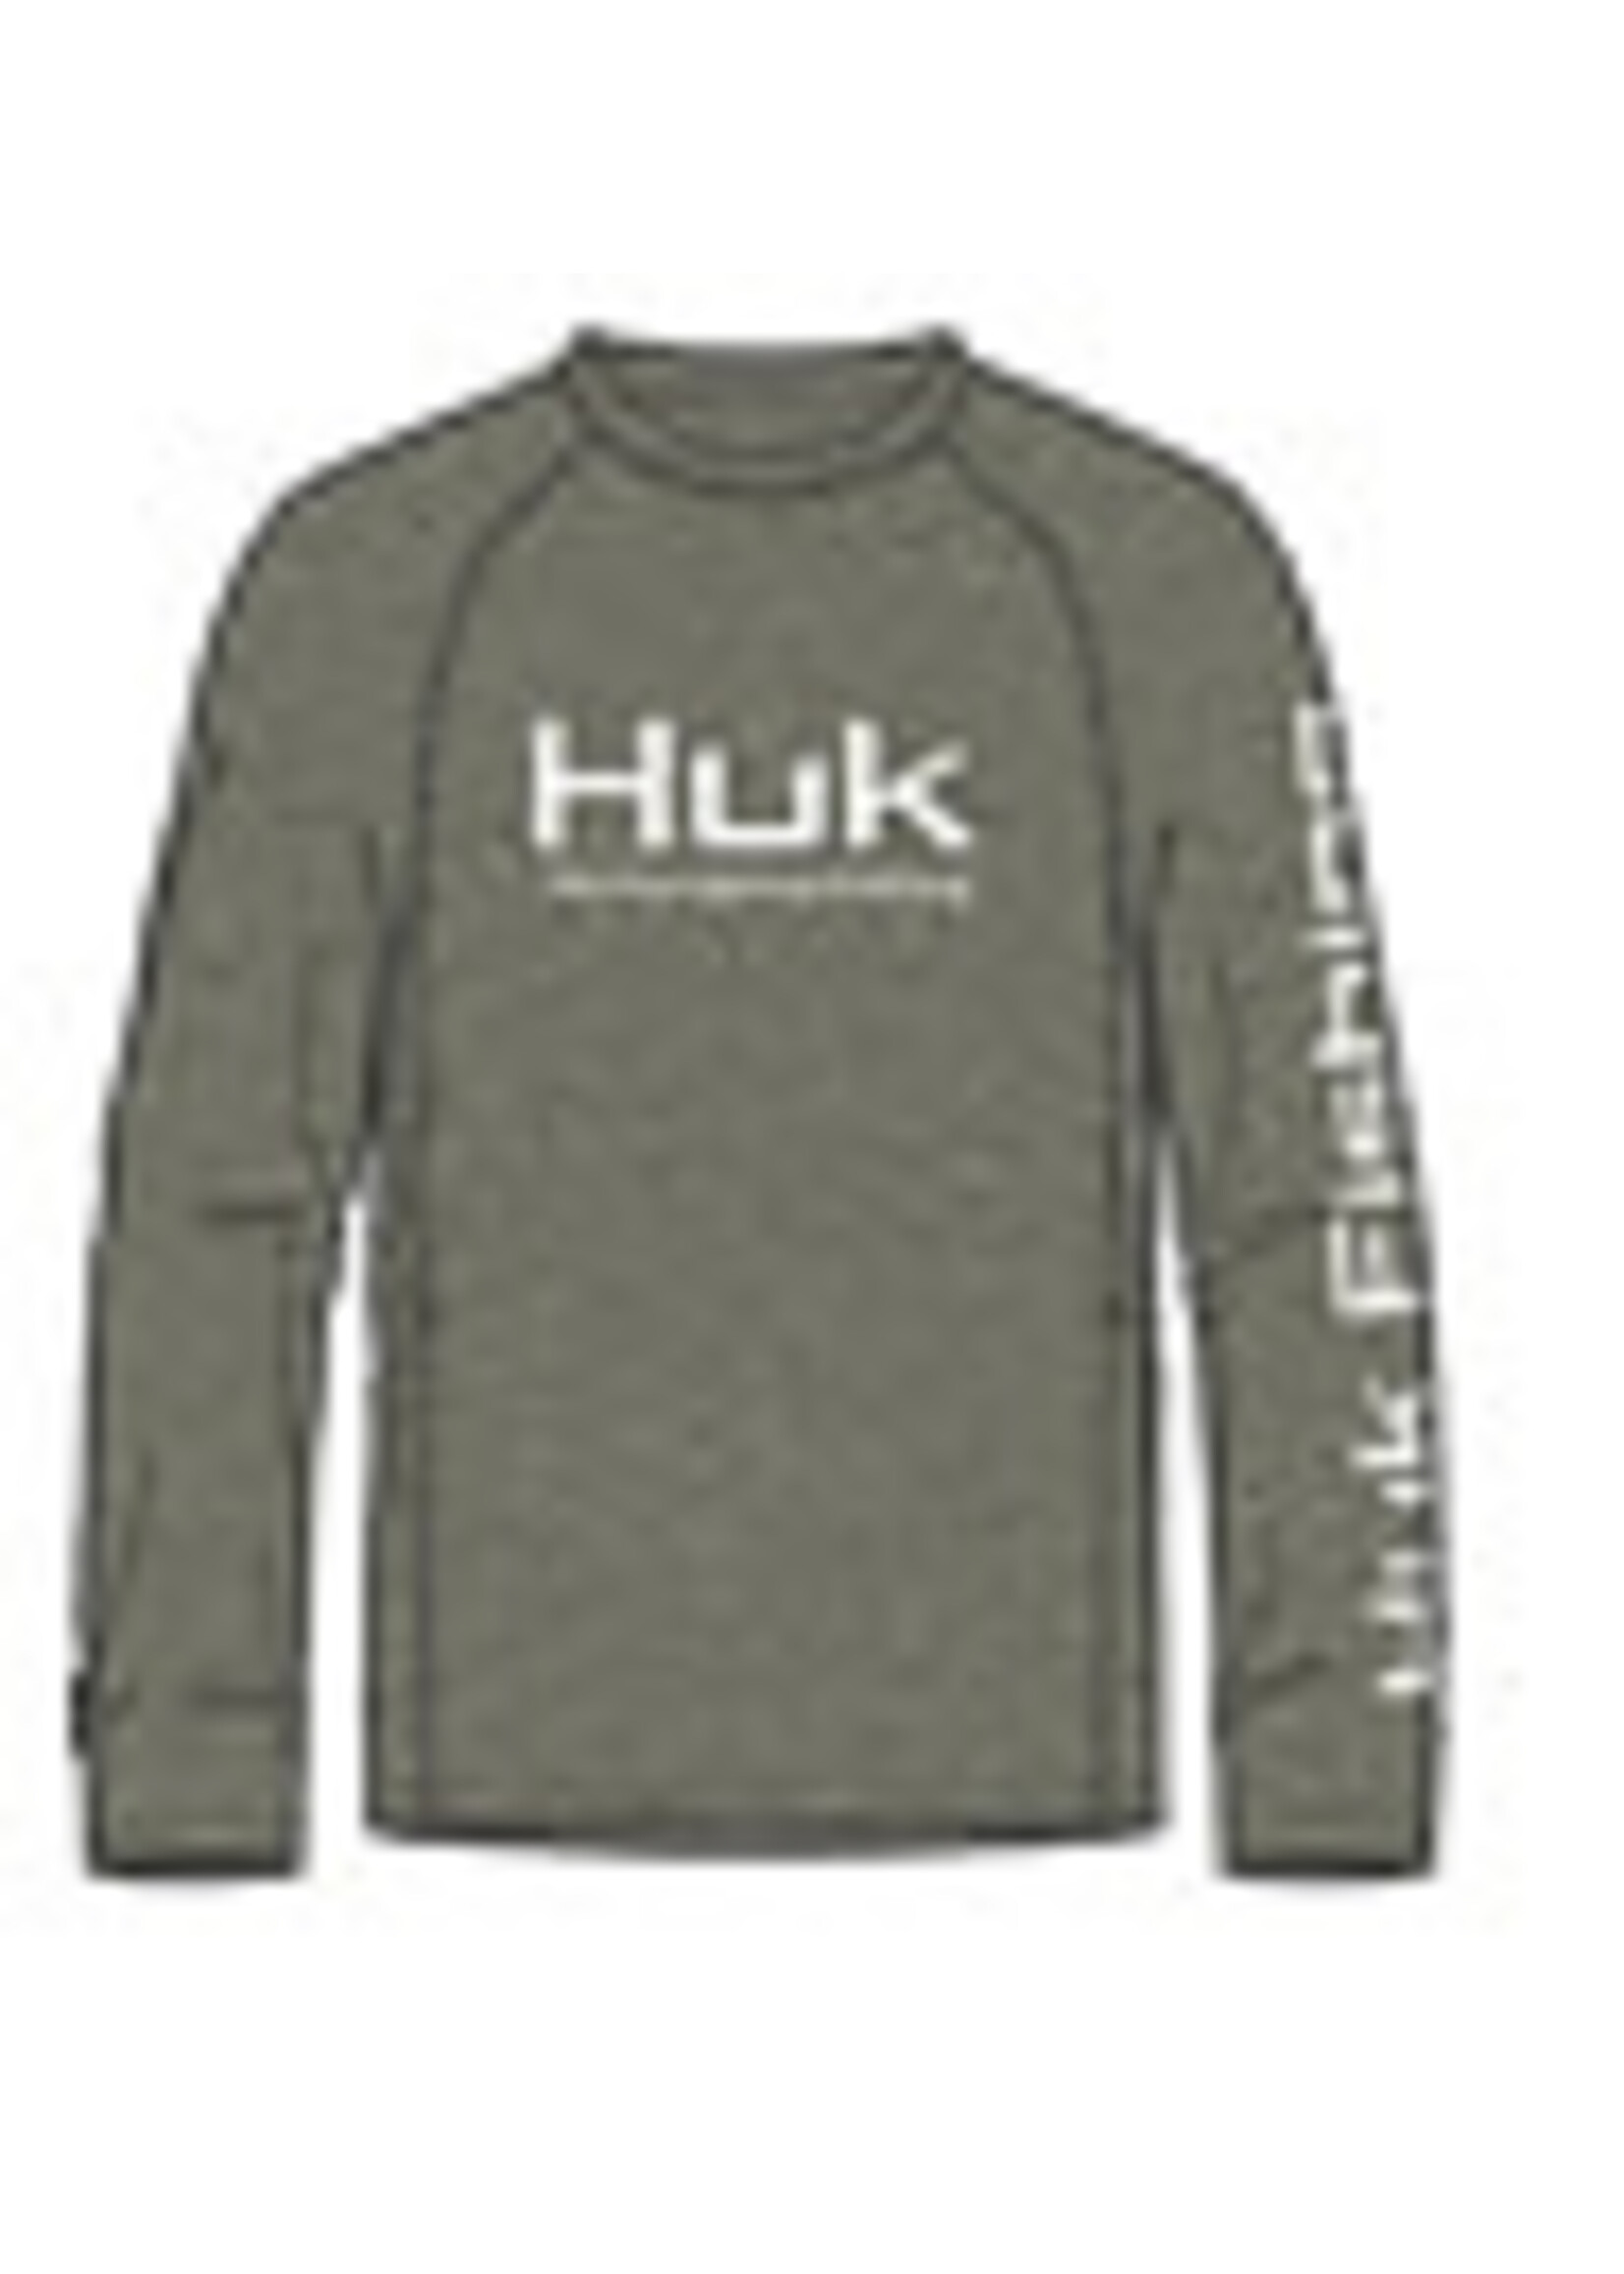 Huk HUK Pursuit Crew -Heather Moss